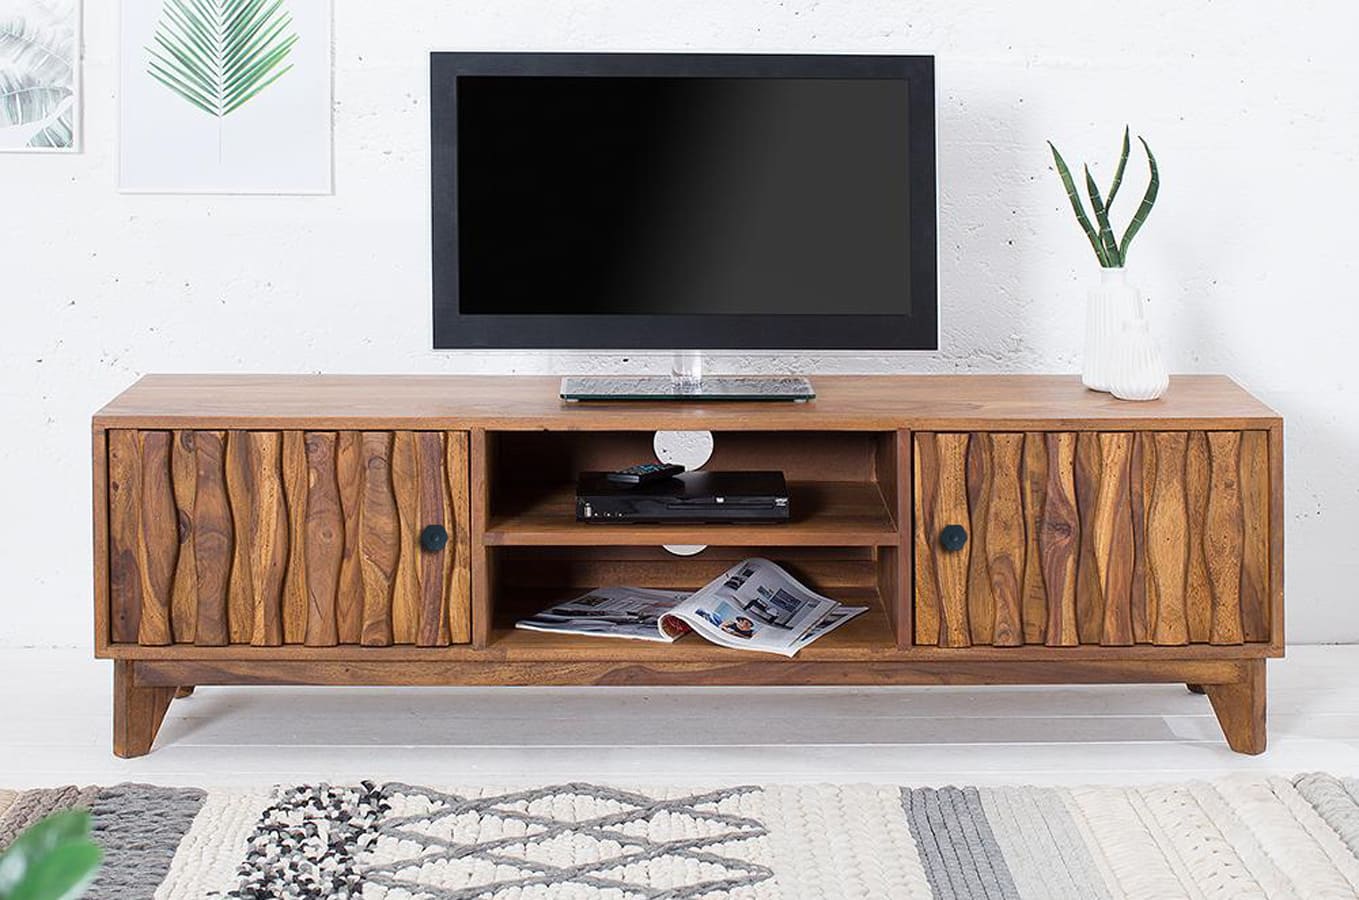 Small size springtek drishya solid wood tv entertainment unit